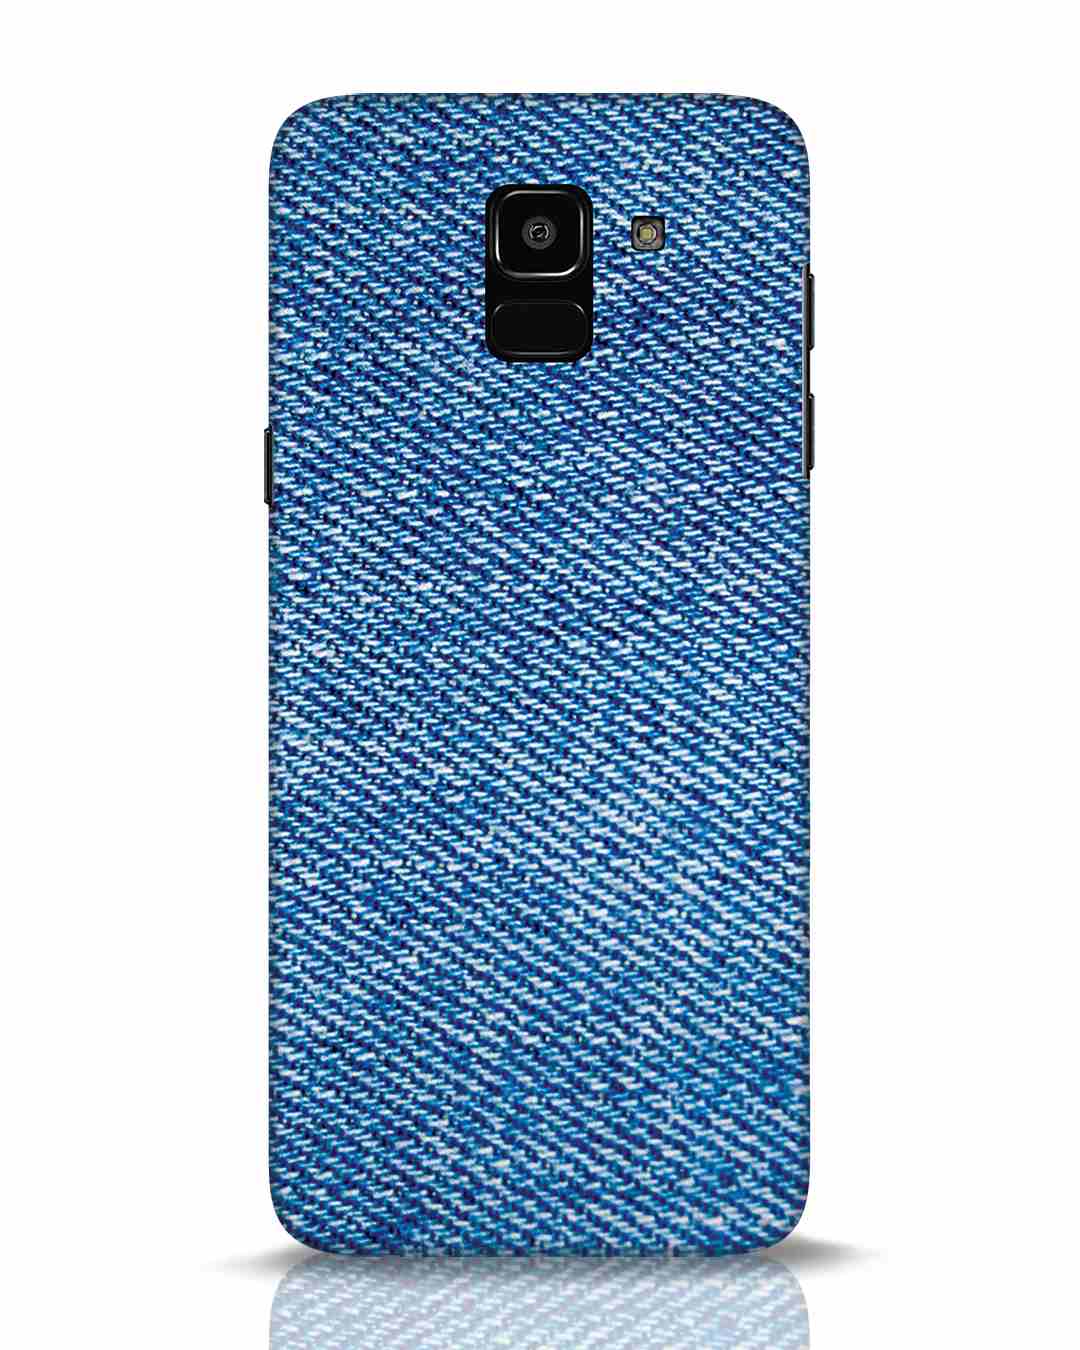 Buy Indigo Samsung Galaxy J6 Mobile Cover For Unisex Online At Bewakoof 8869